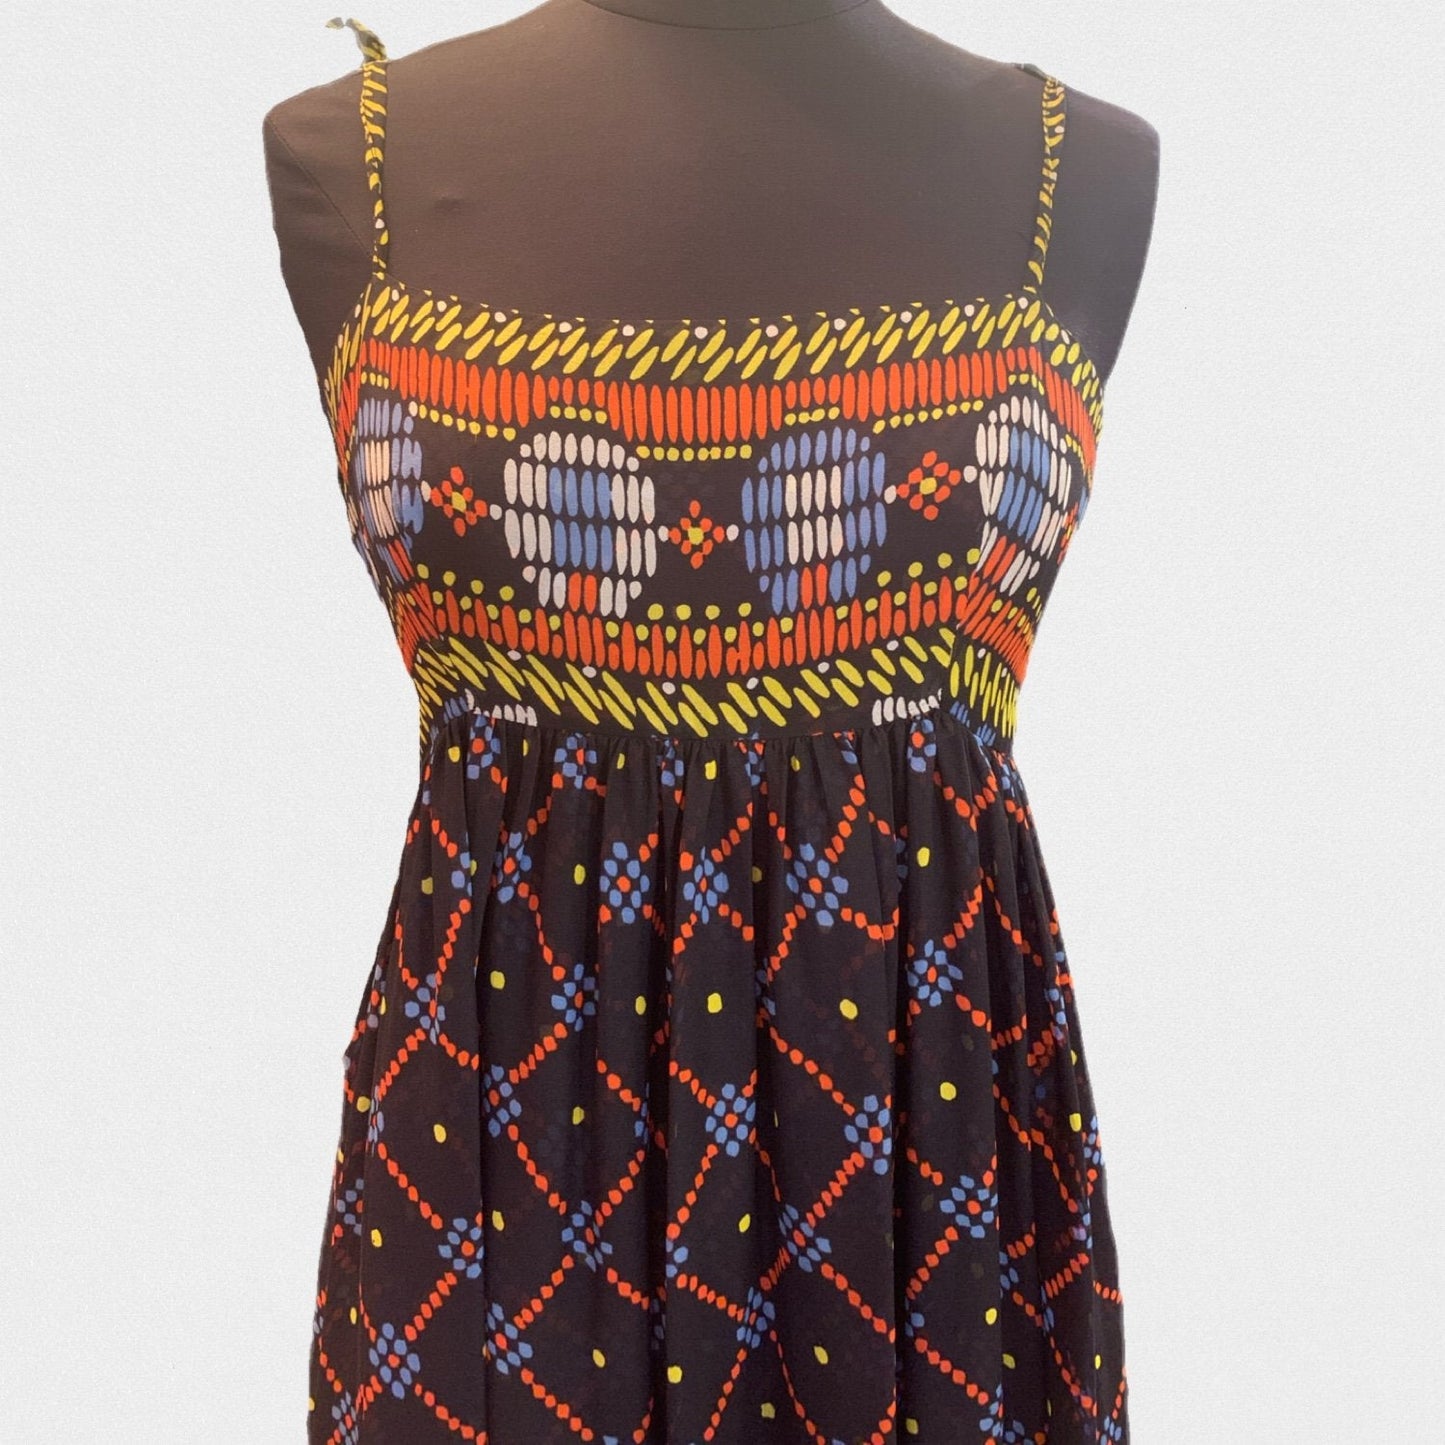 Lysis vintage Lanvin silk dress - S - 1970s